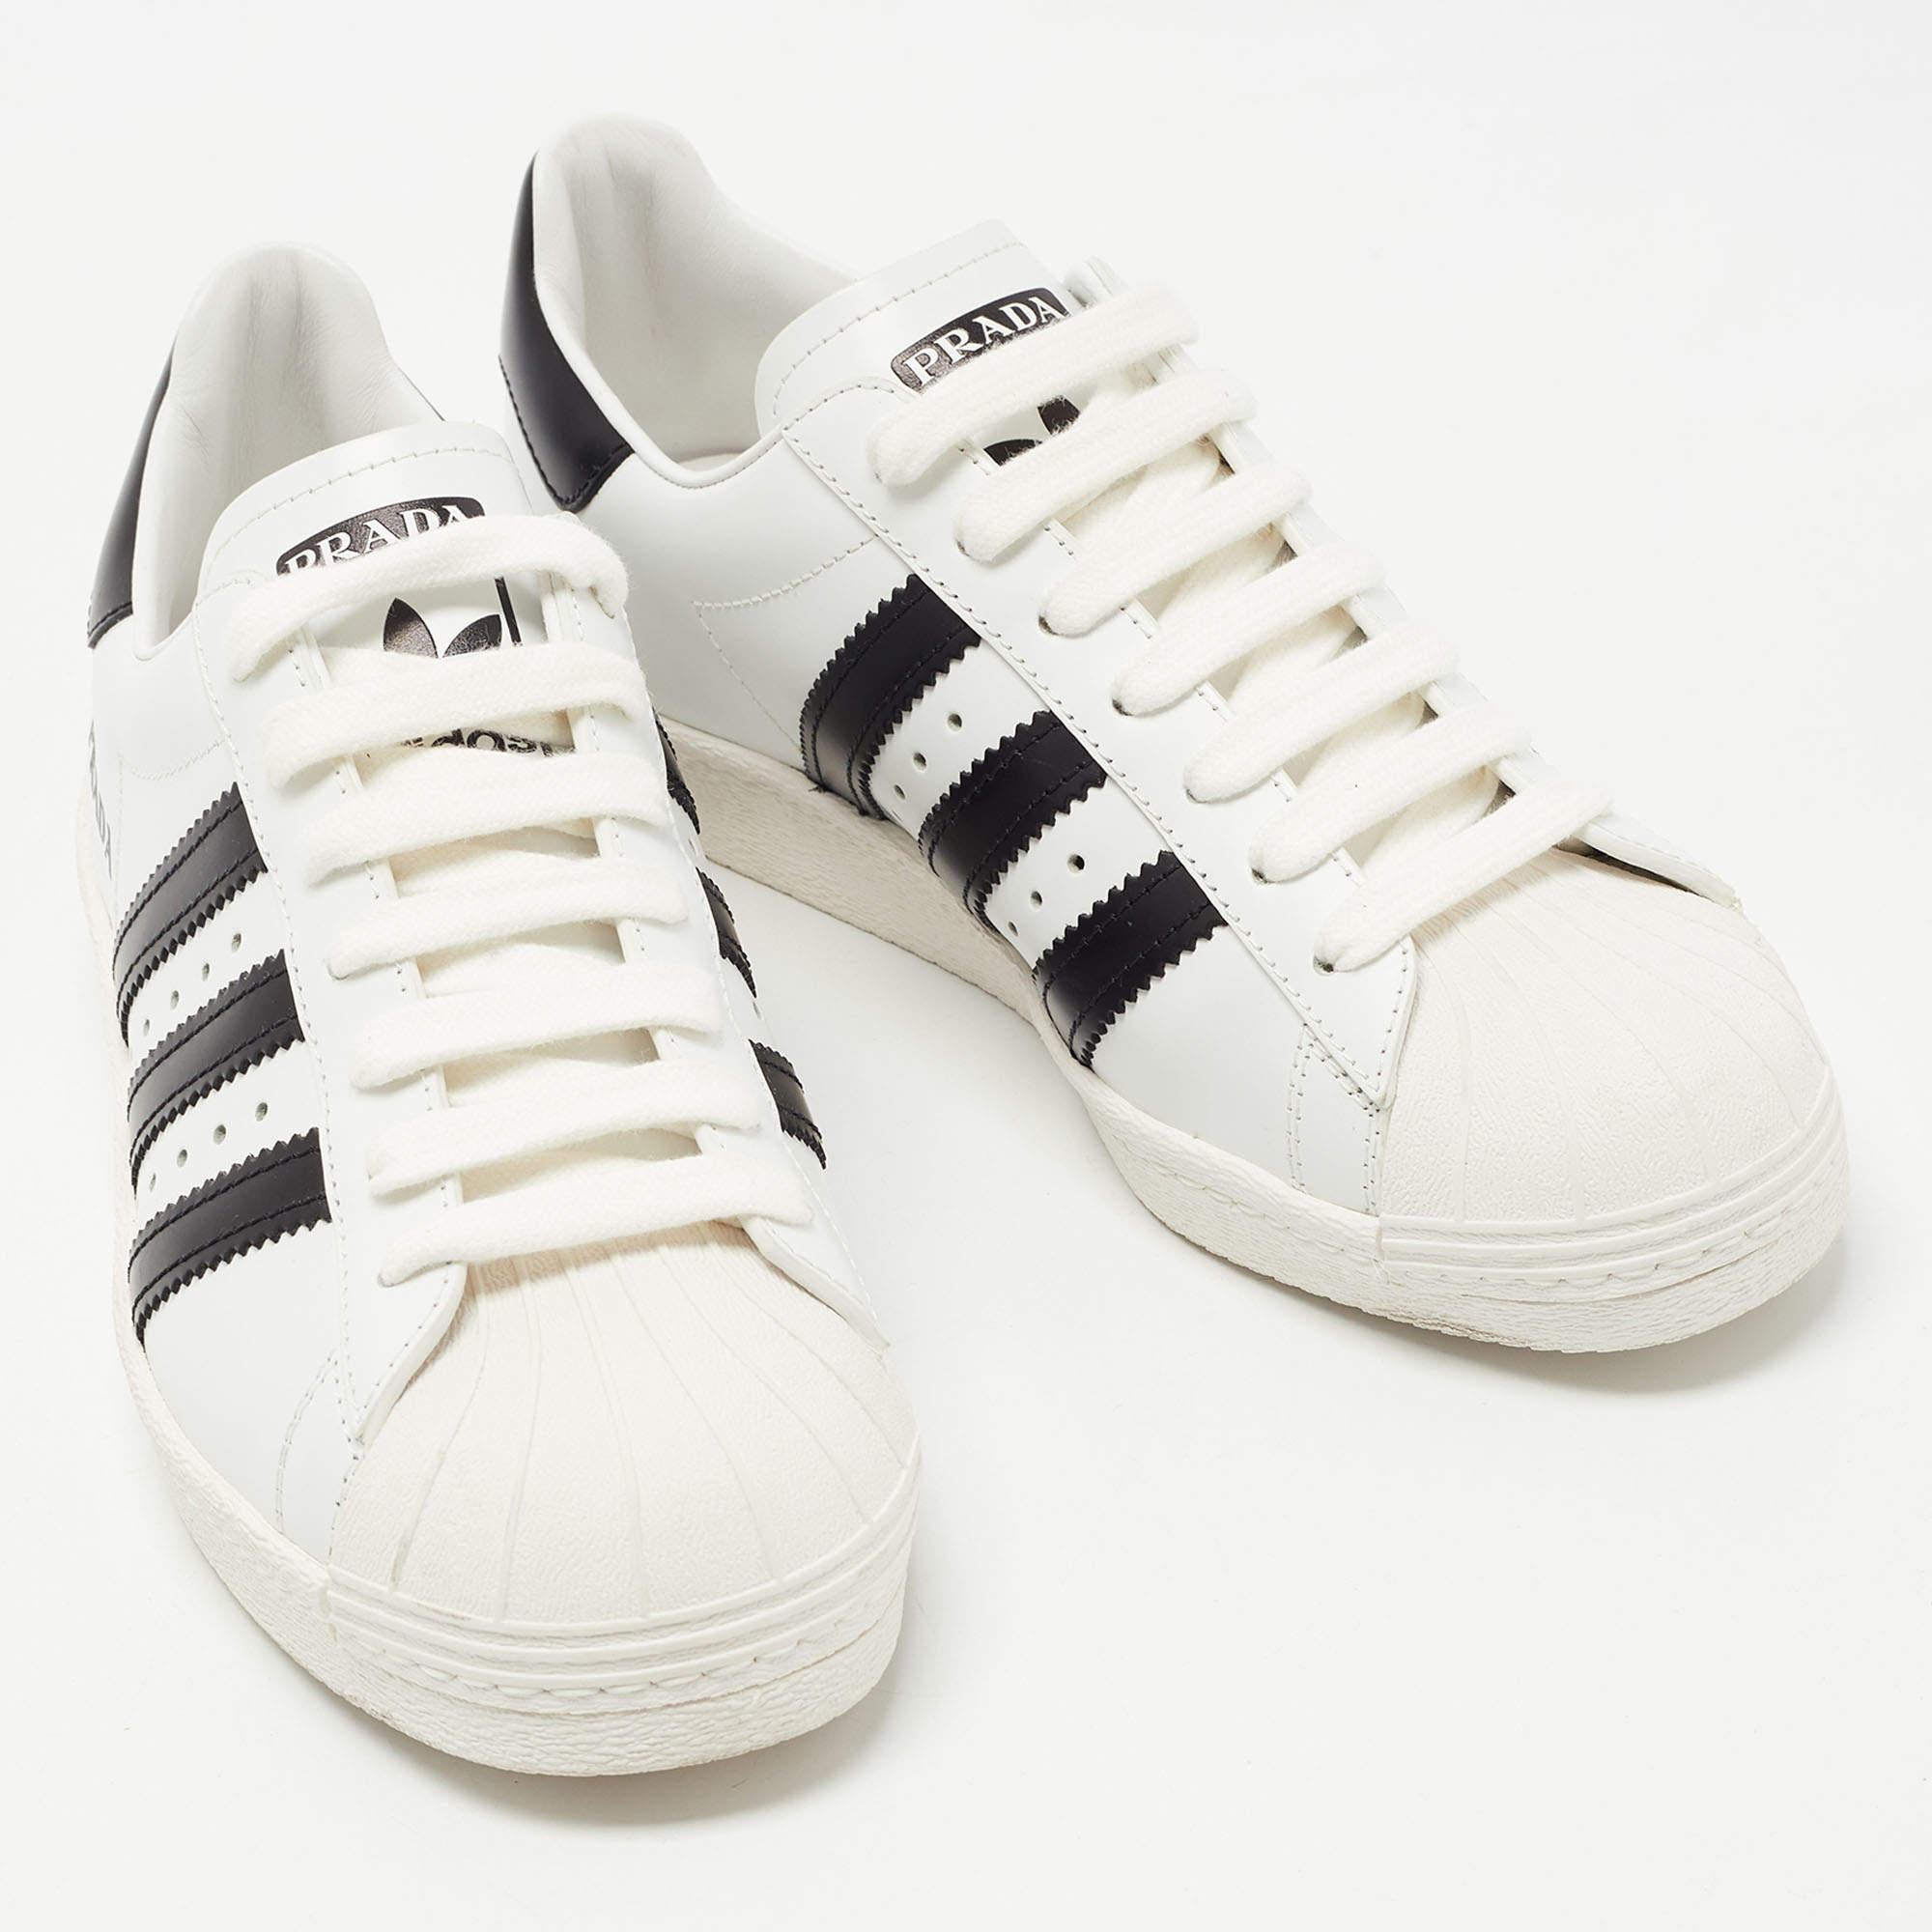 Prada x Adidas White/Black Leather Superstar Sneakers Size 37 1/3 1